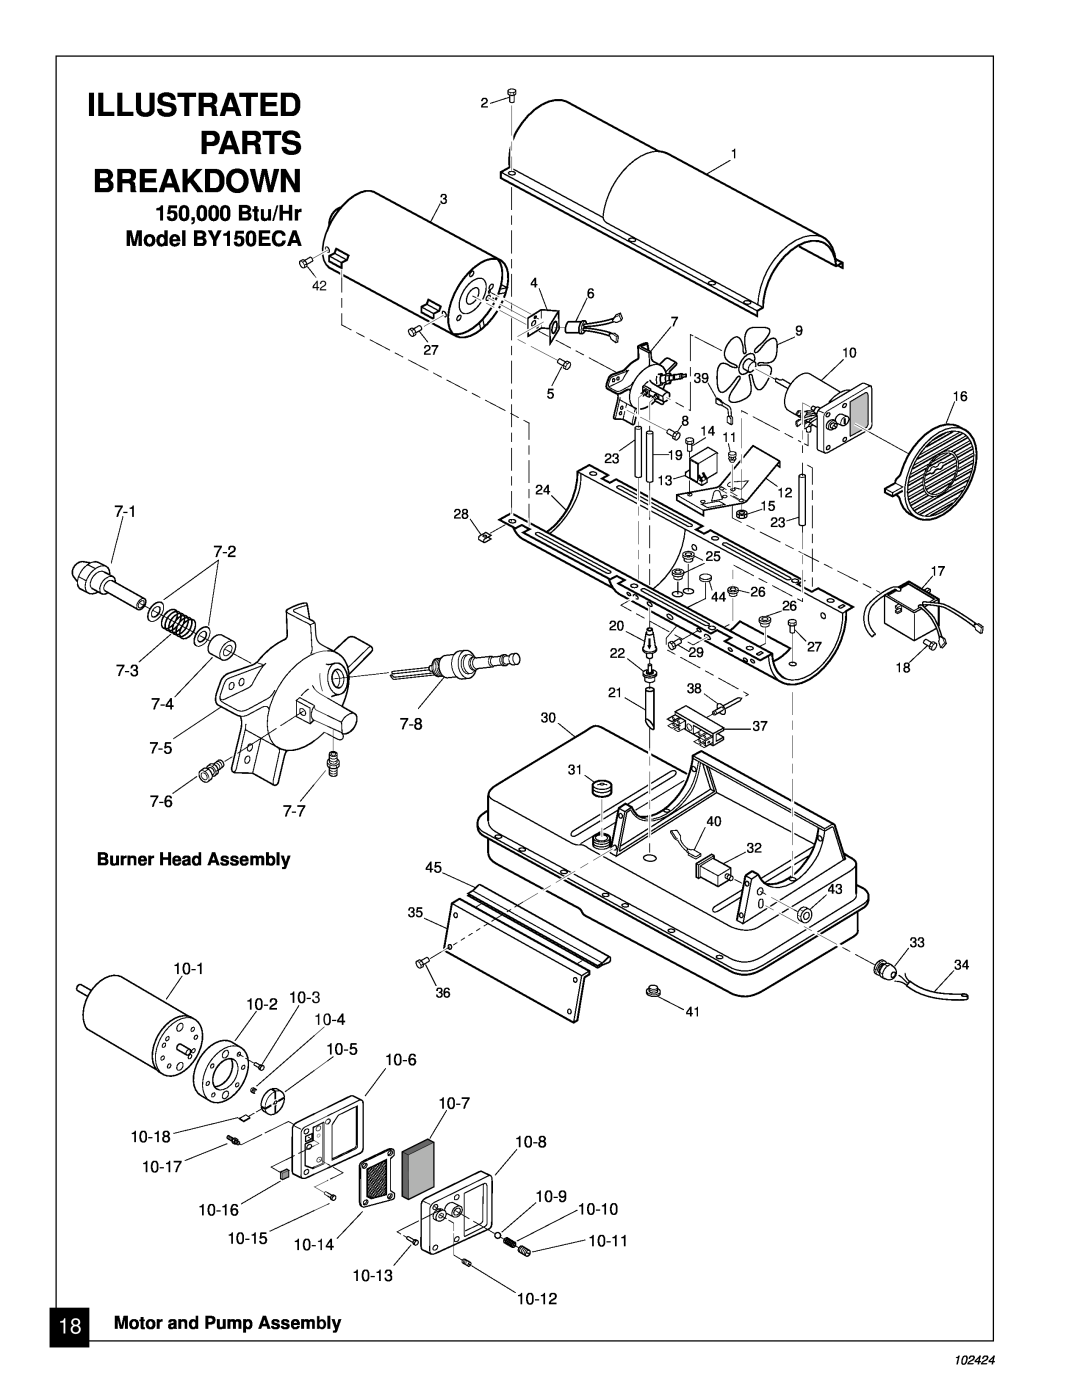 Desa 150,000 Btu/Hr, Model BY150ECA, Parts, Breakdown, Illustrated, Burner Head Assembly, 18Motor and Pump Assembly 